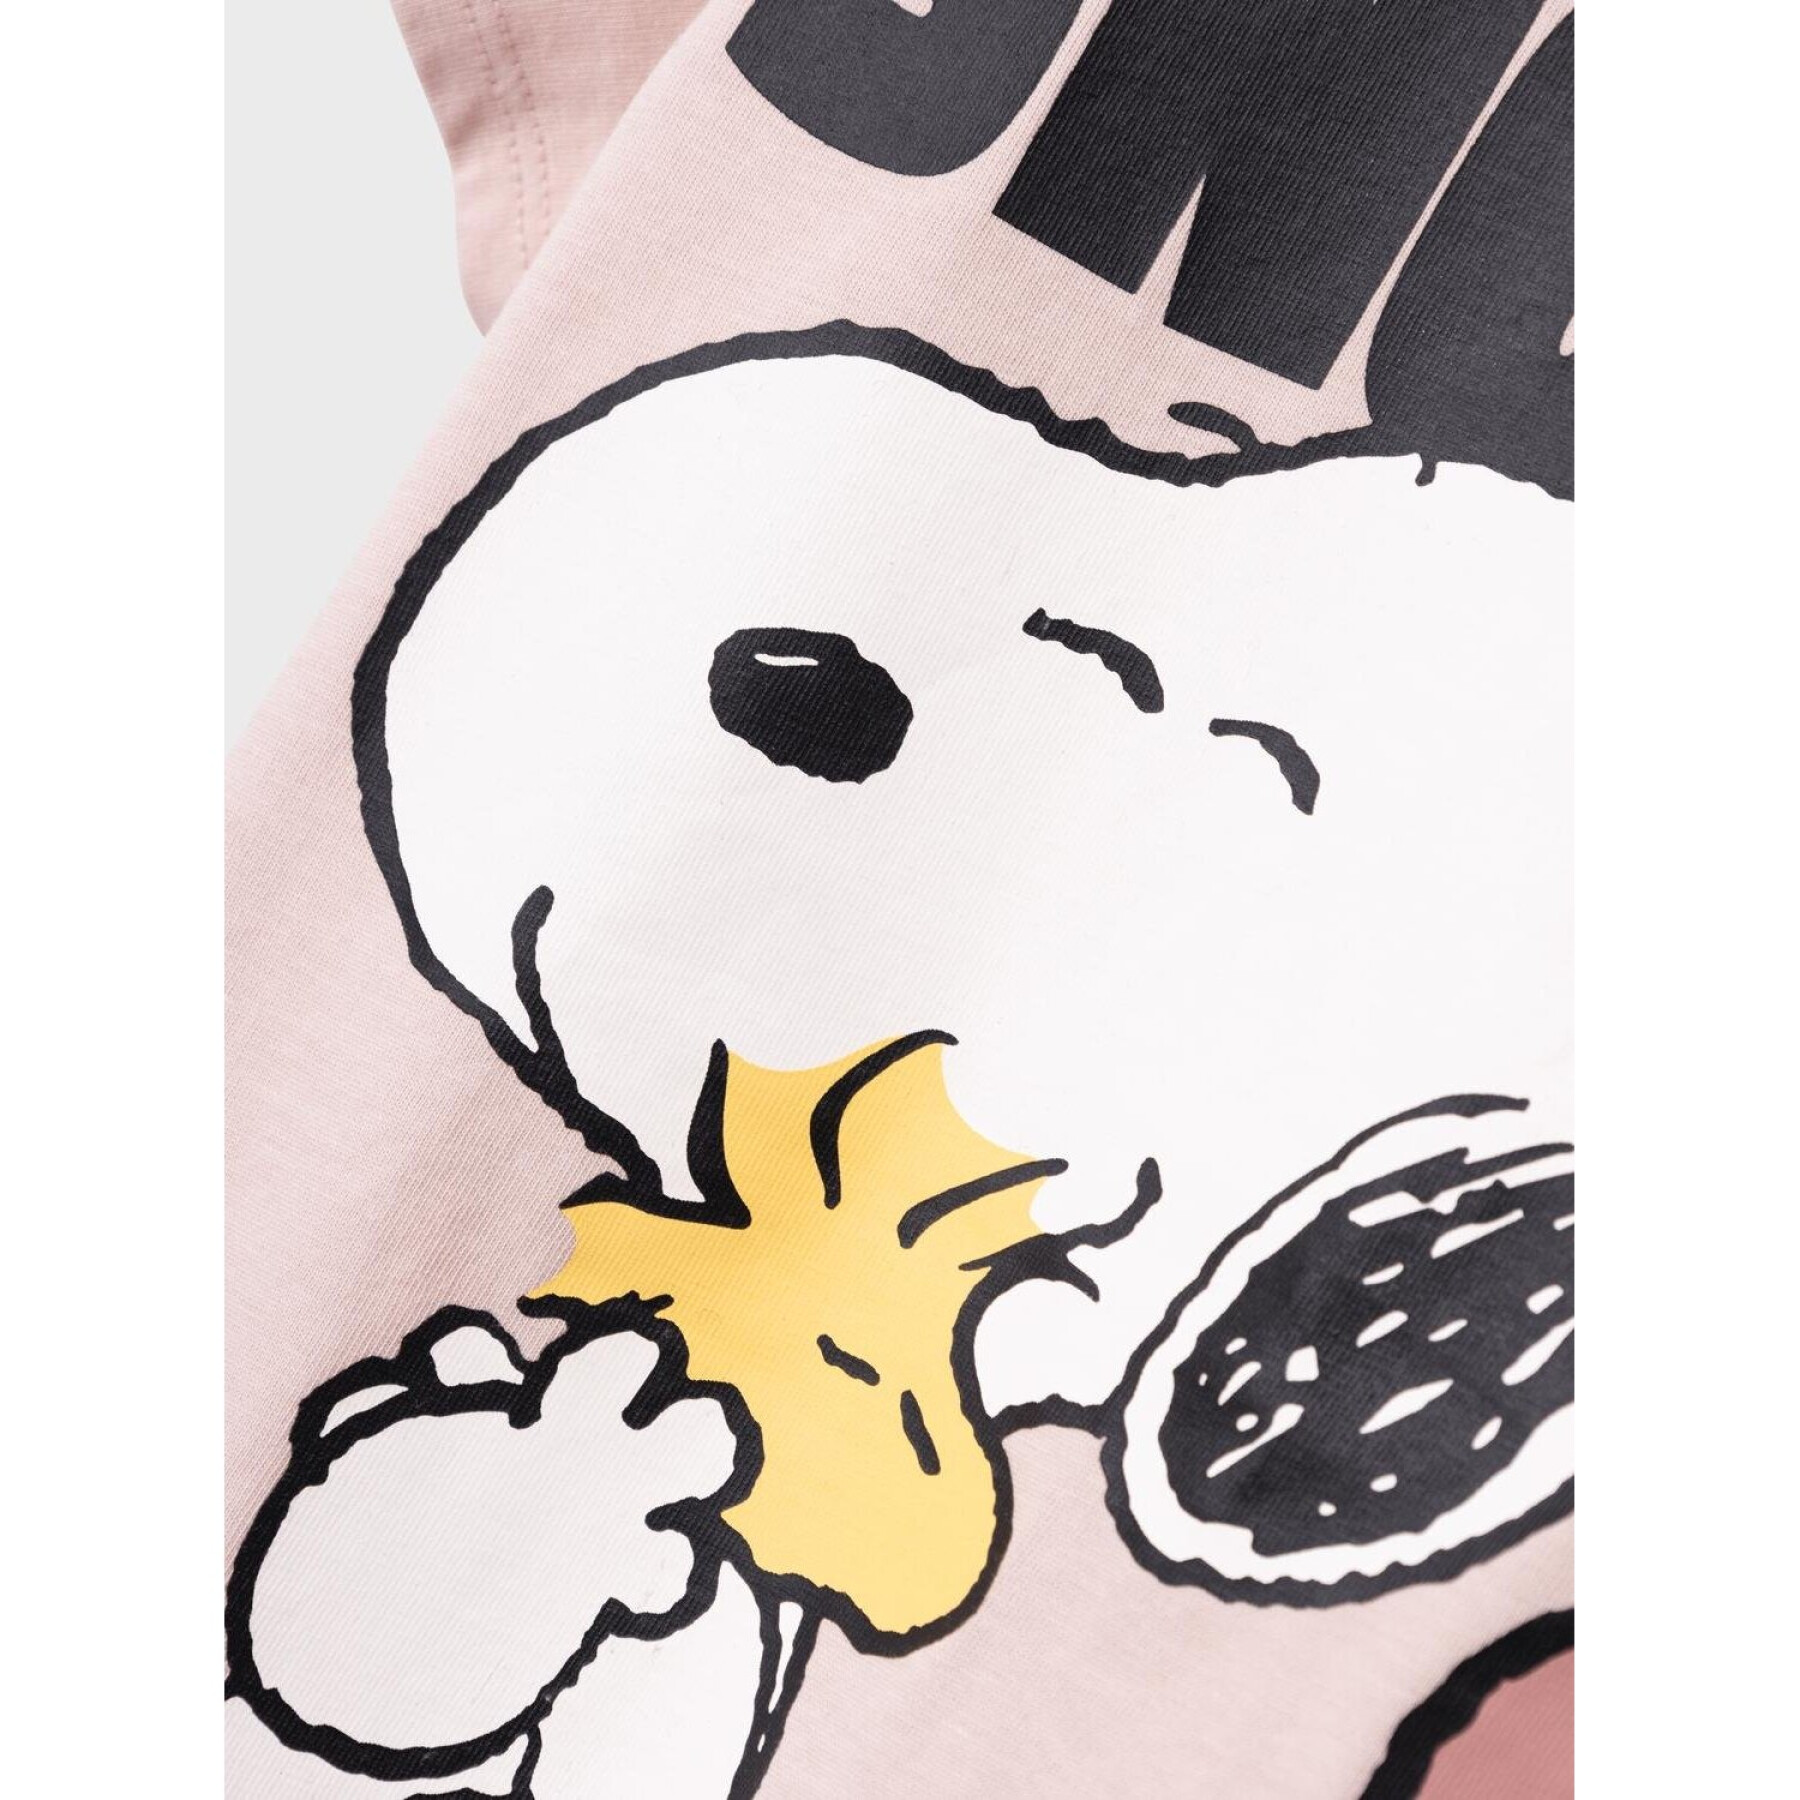 Camiseta infantil Name it Nanni Snoopy